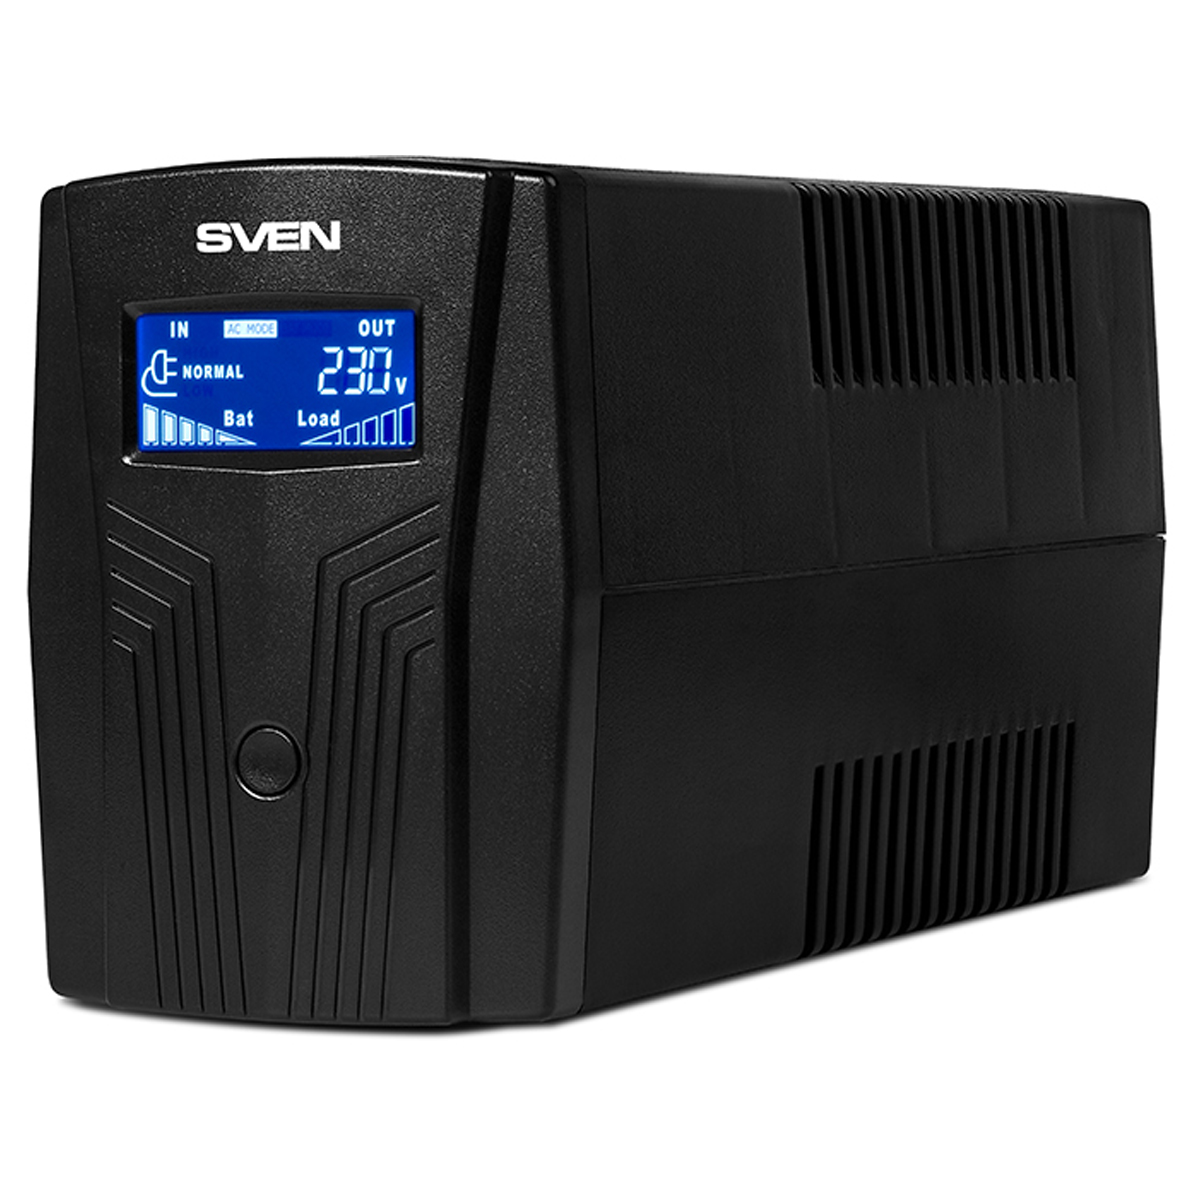    Sven PRO 650, 2 , 650A, 390, LCD ,  